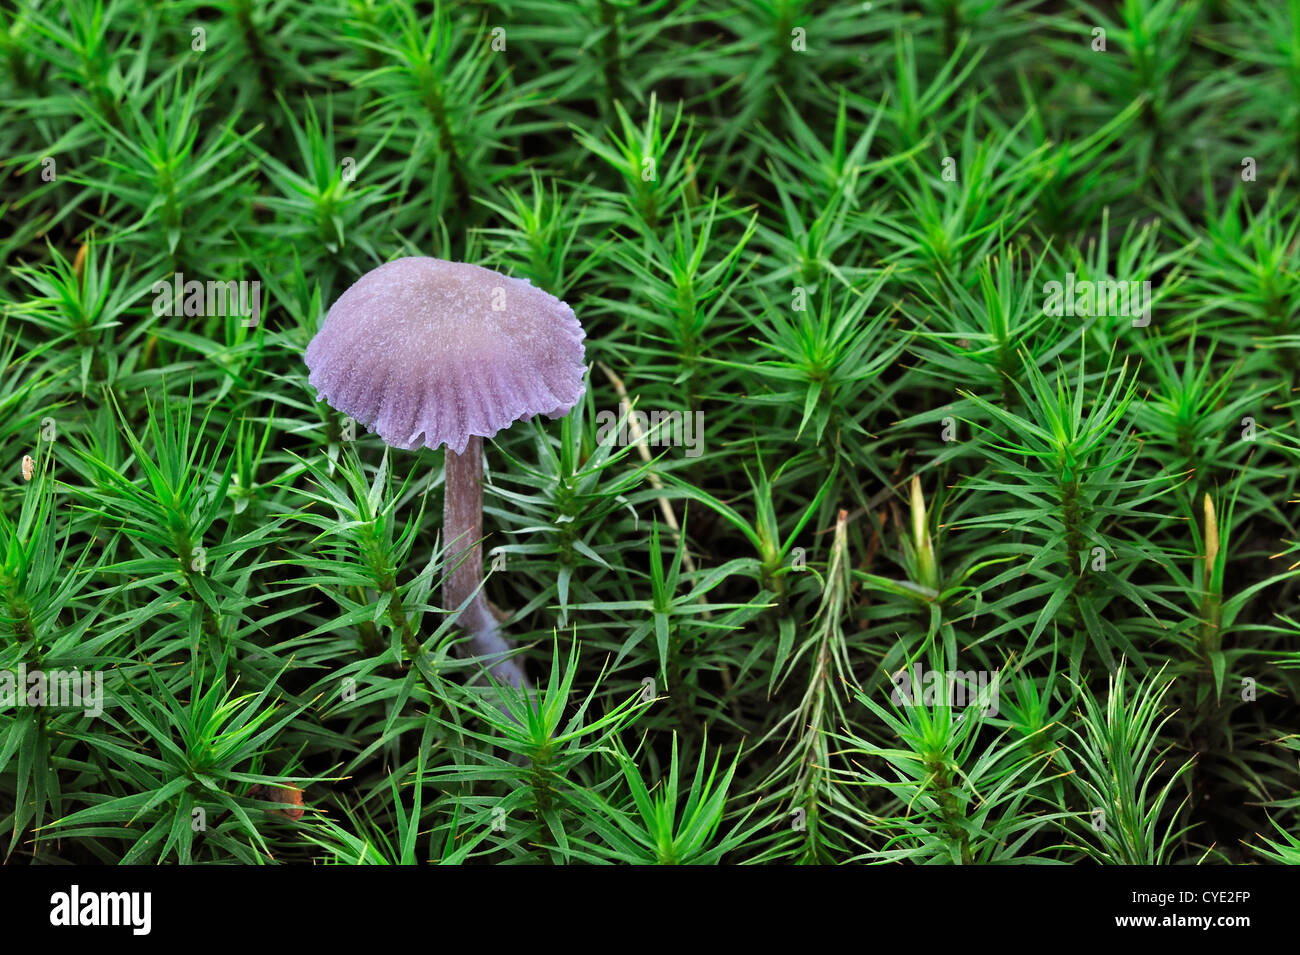 Amethyst Betrüger Pilz (Lacktrichterling Amethystina / Lacktrichterling Amethystea) unter Moos im herbstlichen Wald Stockfoto